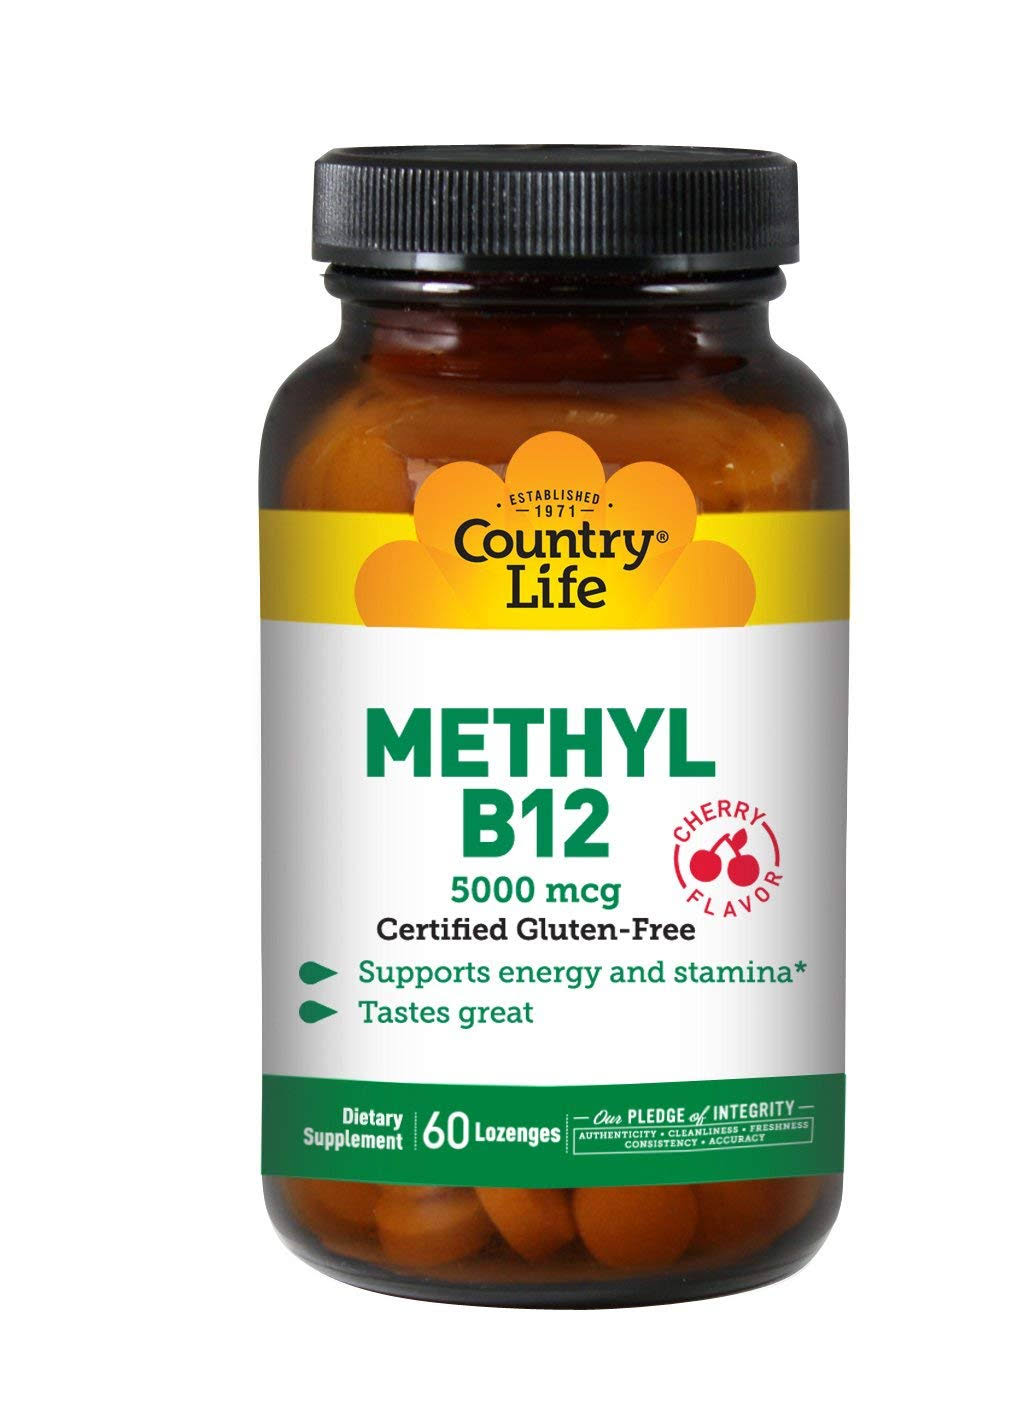 Country Life Methyl B12 Dietary Supplement - Cherry, 5000mcg 60 Lozenges